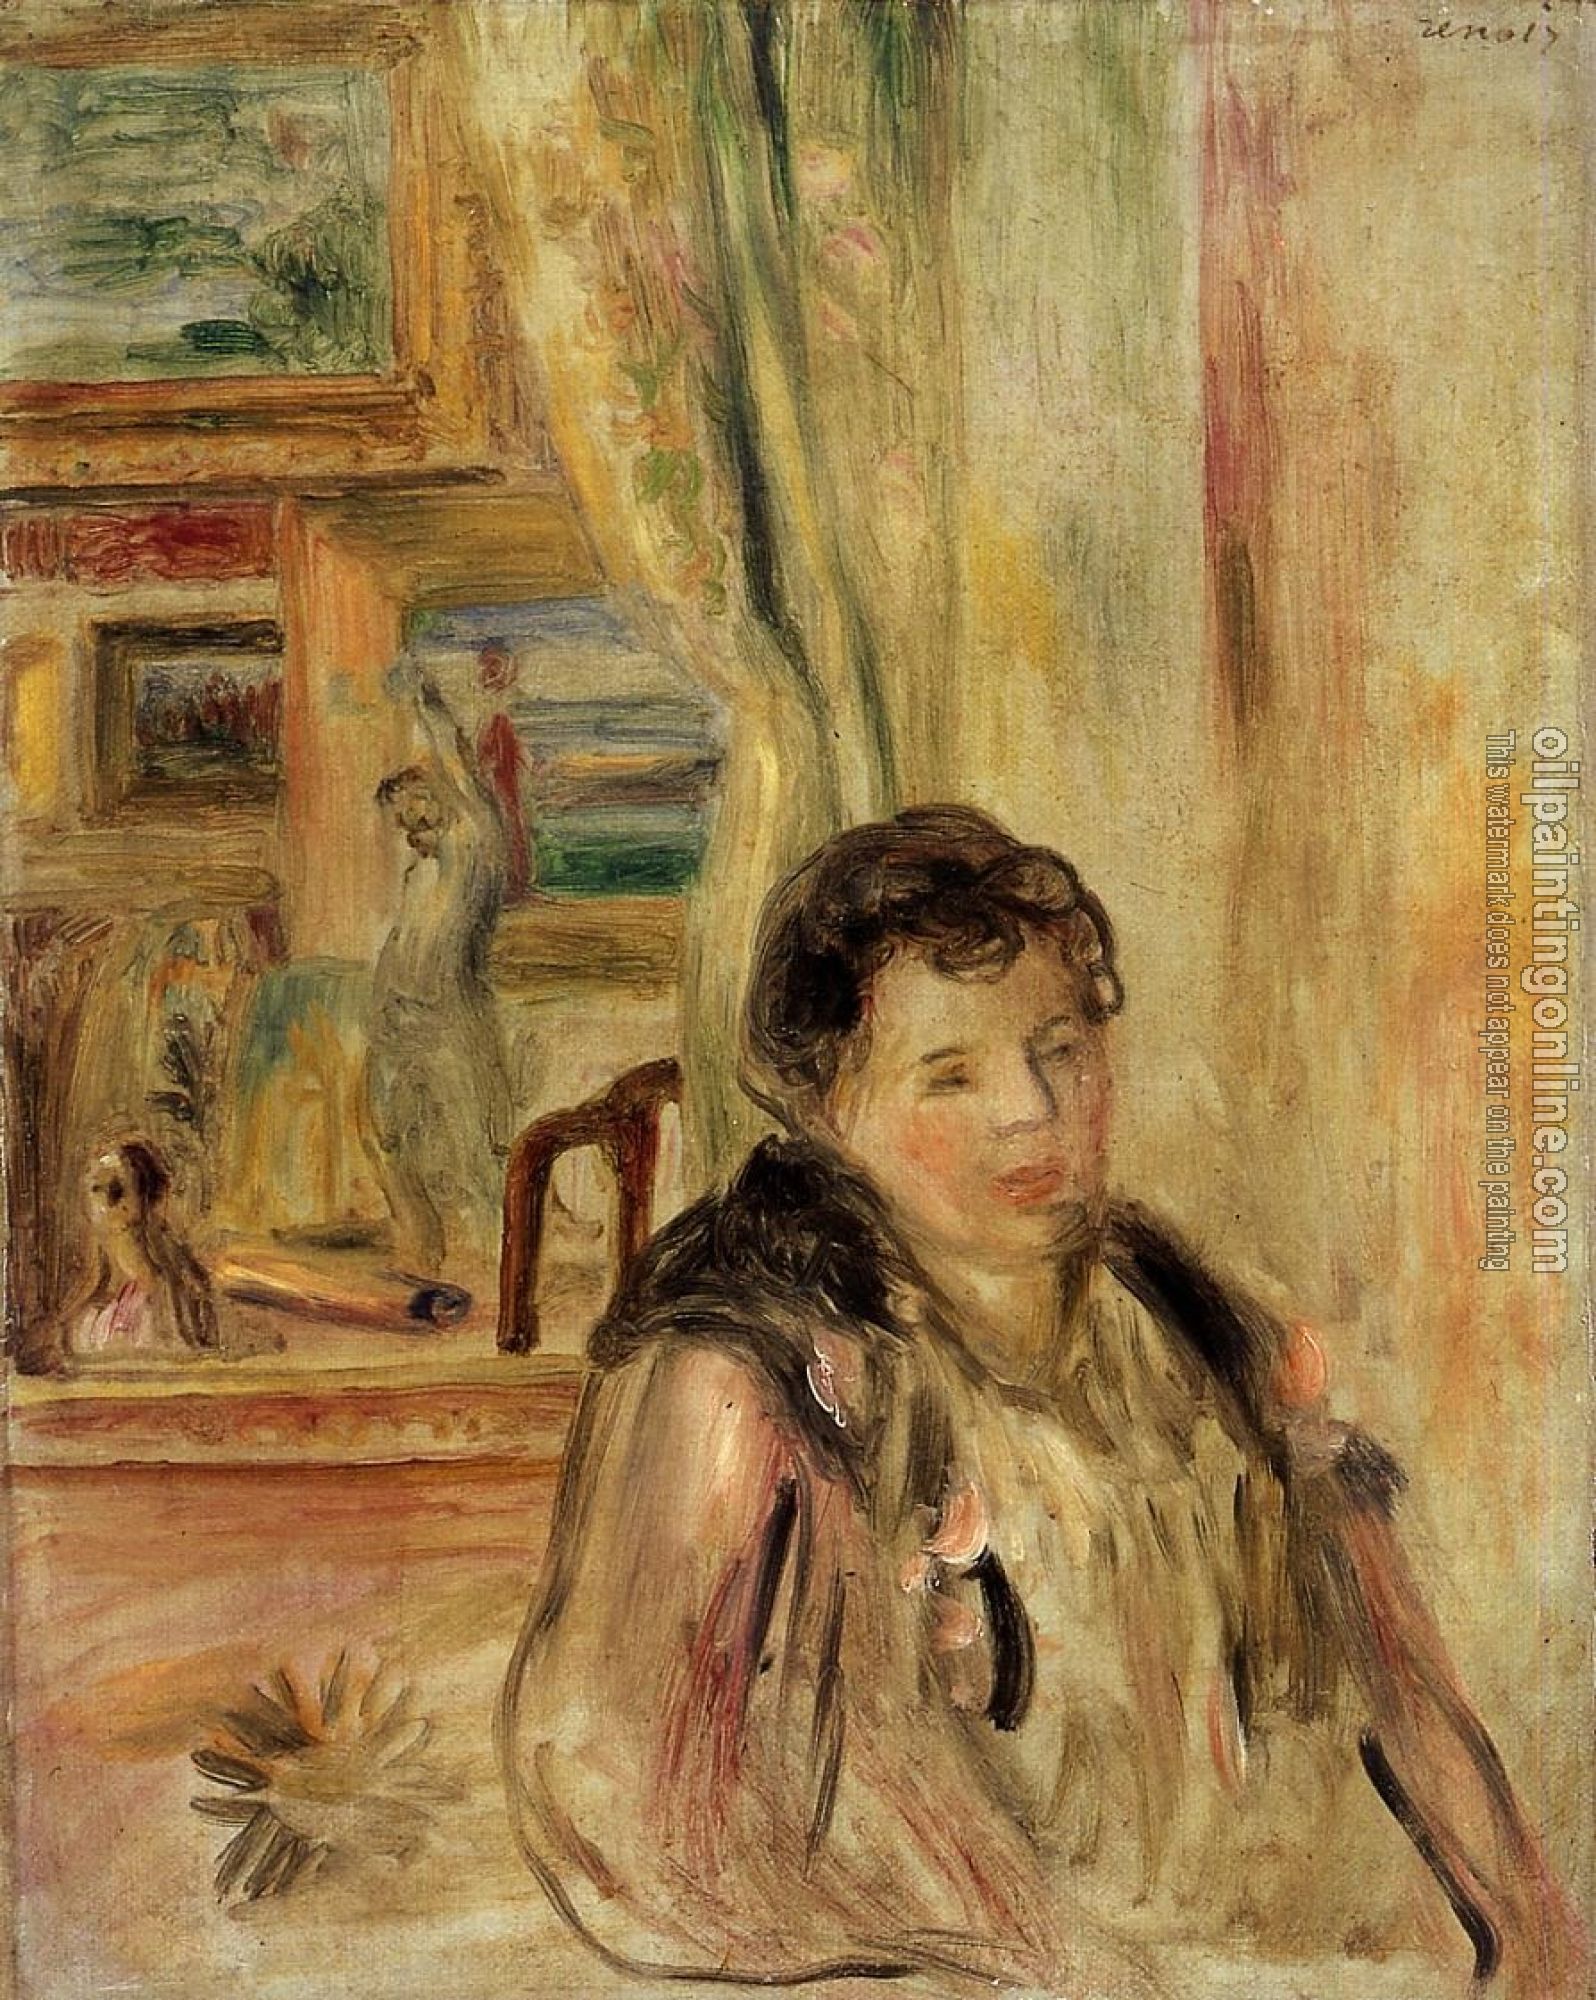 Renoir, Pierre Auguste - Woman in an Interior